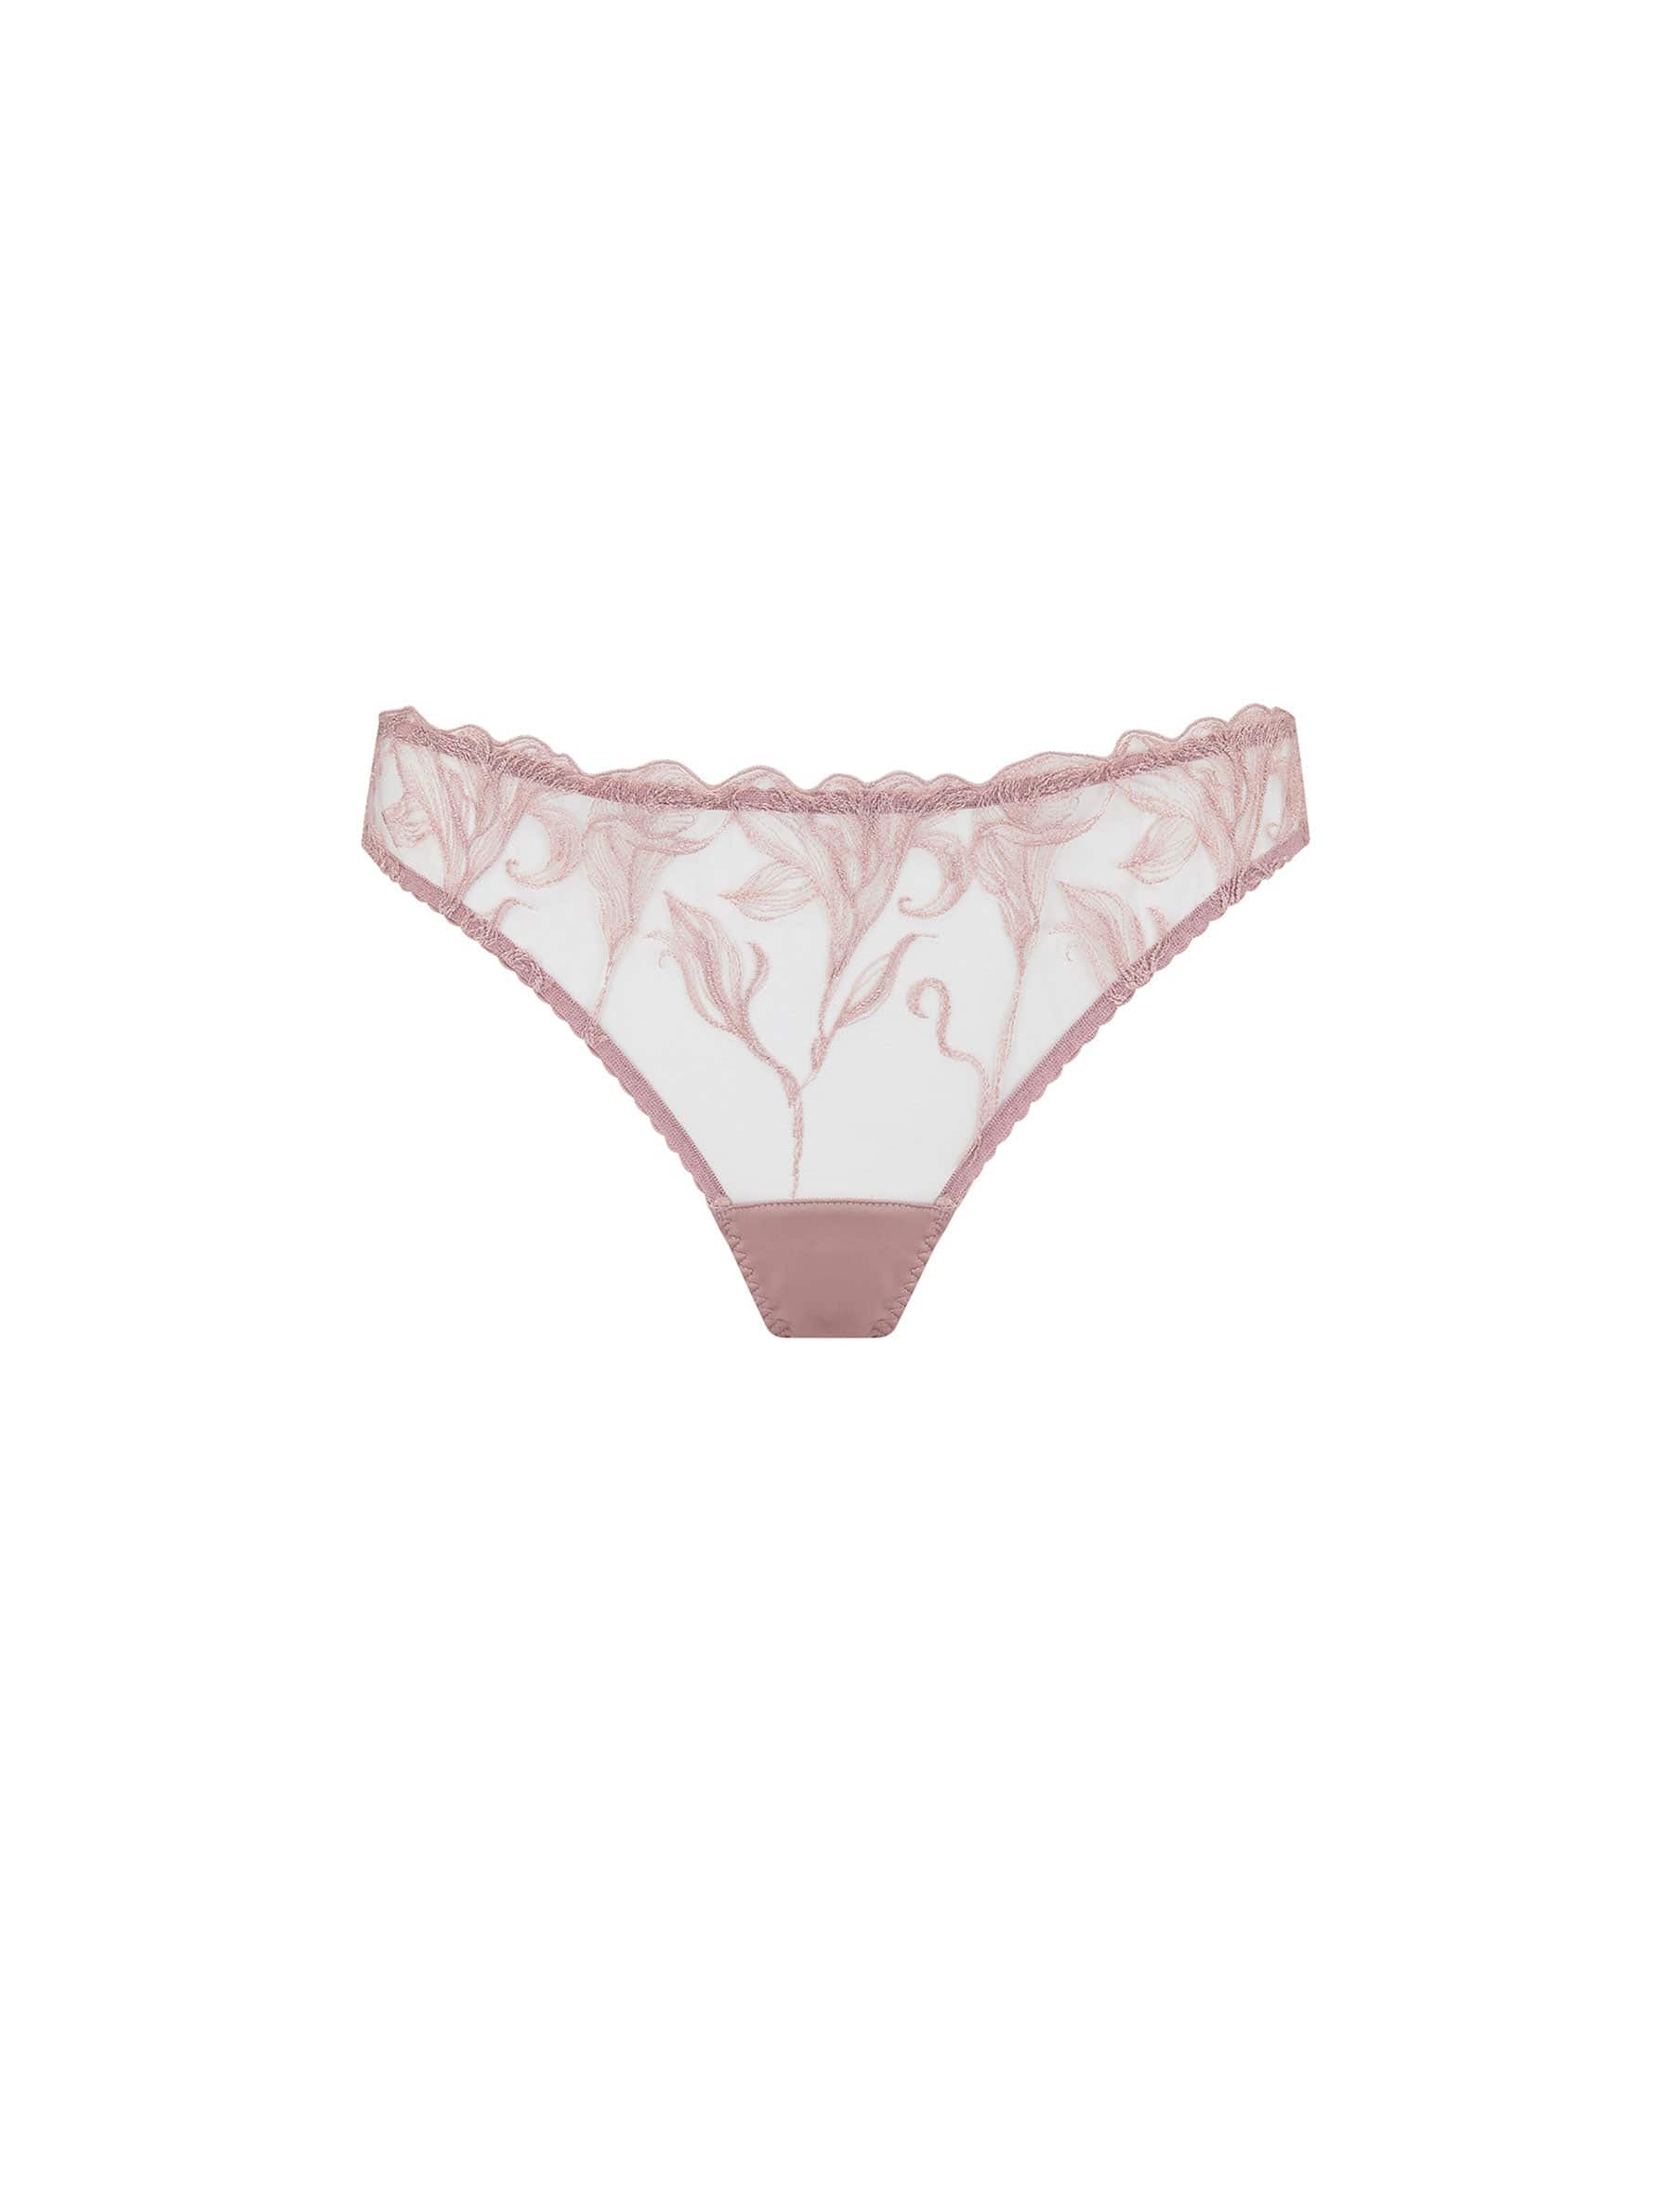 Blush Embroidered Balcony Bra & G-string/Briefs Set - Hot Pink